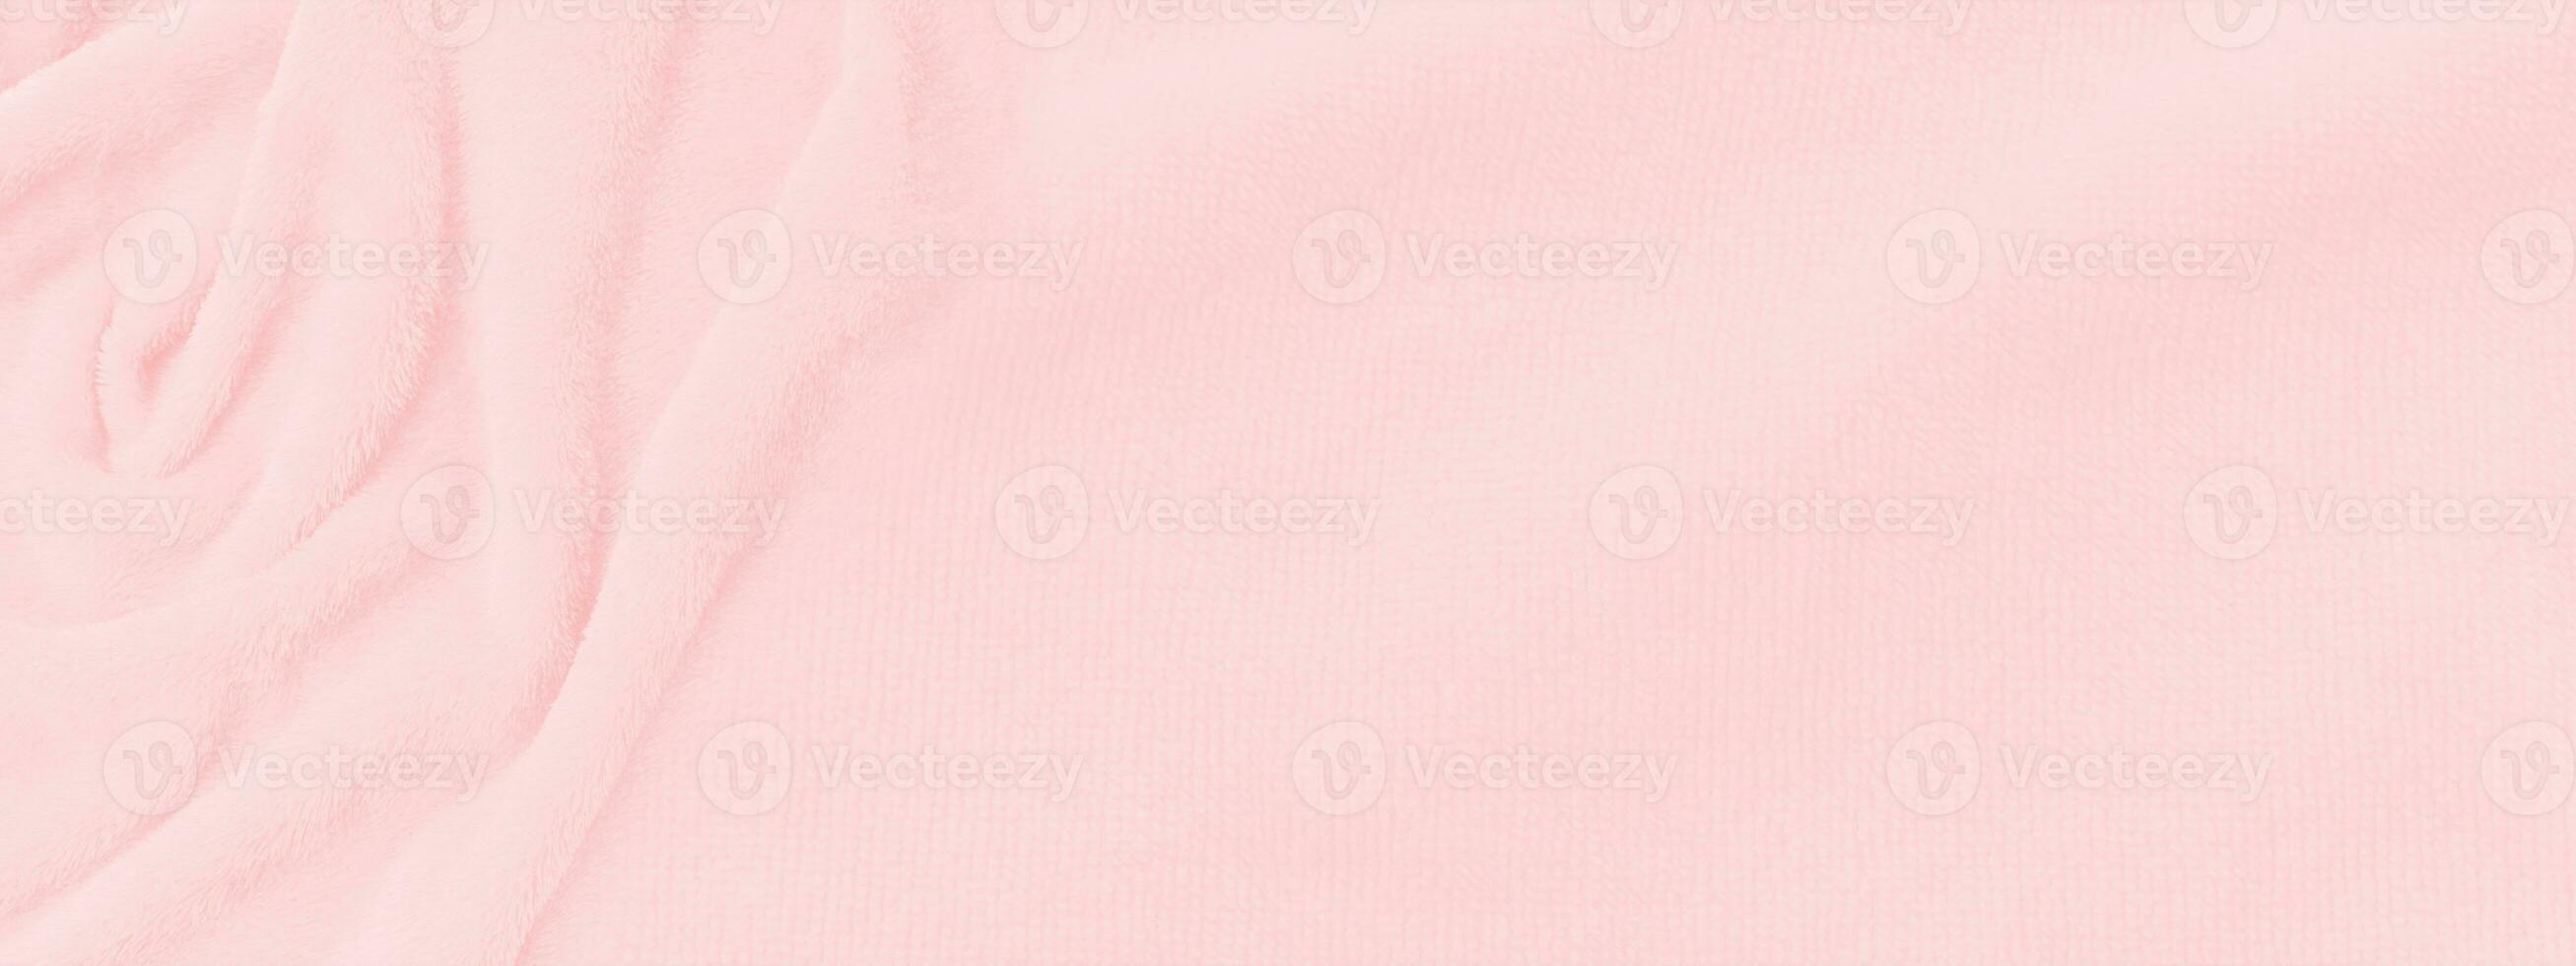 tela de lujo abstracta rosa de textura de seda grunge. para diseño de papel tapiz o fondo. foto